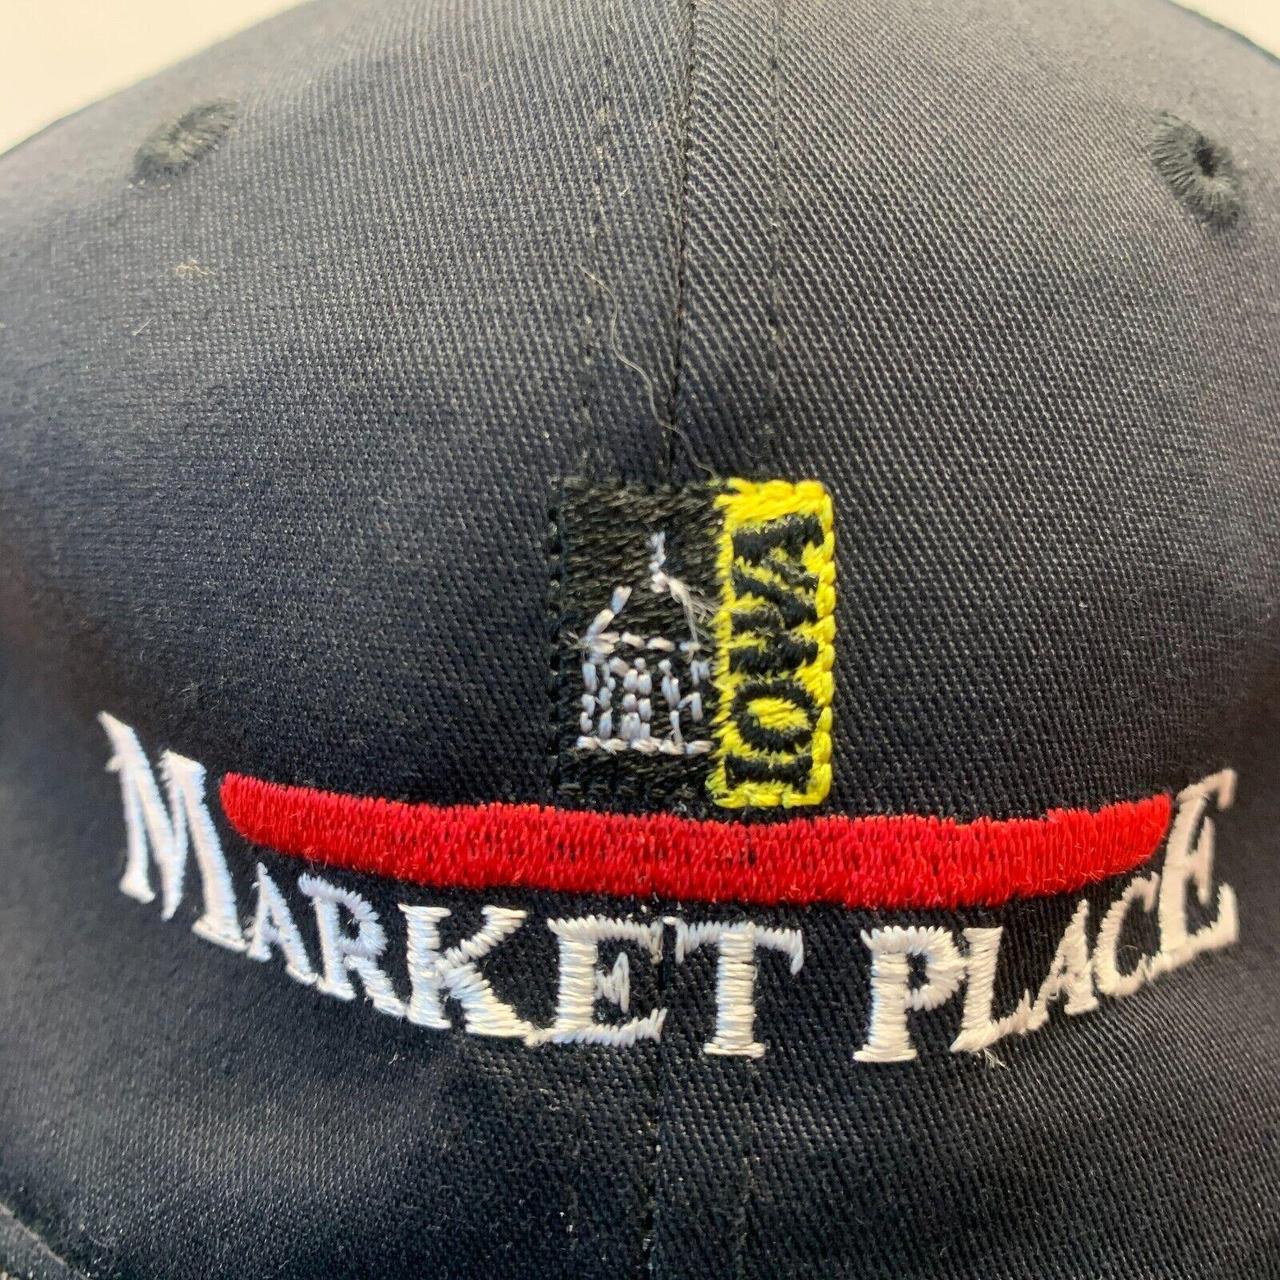 Market Men's Black Hat (3)